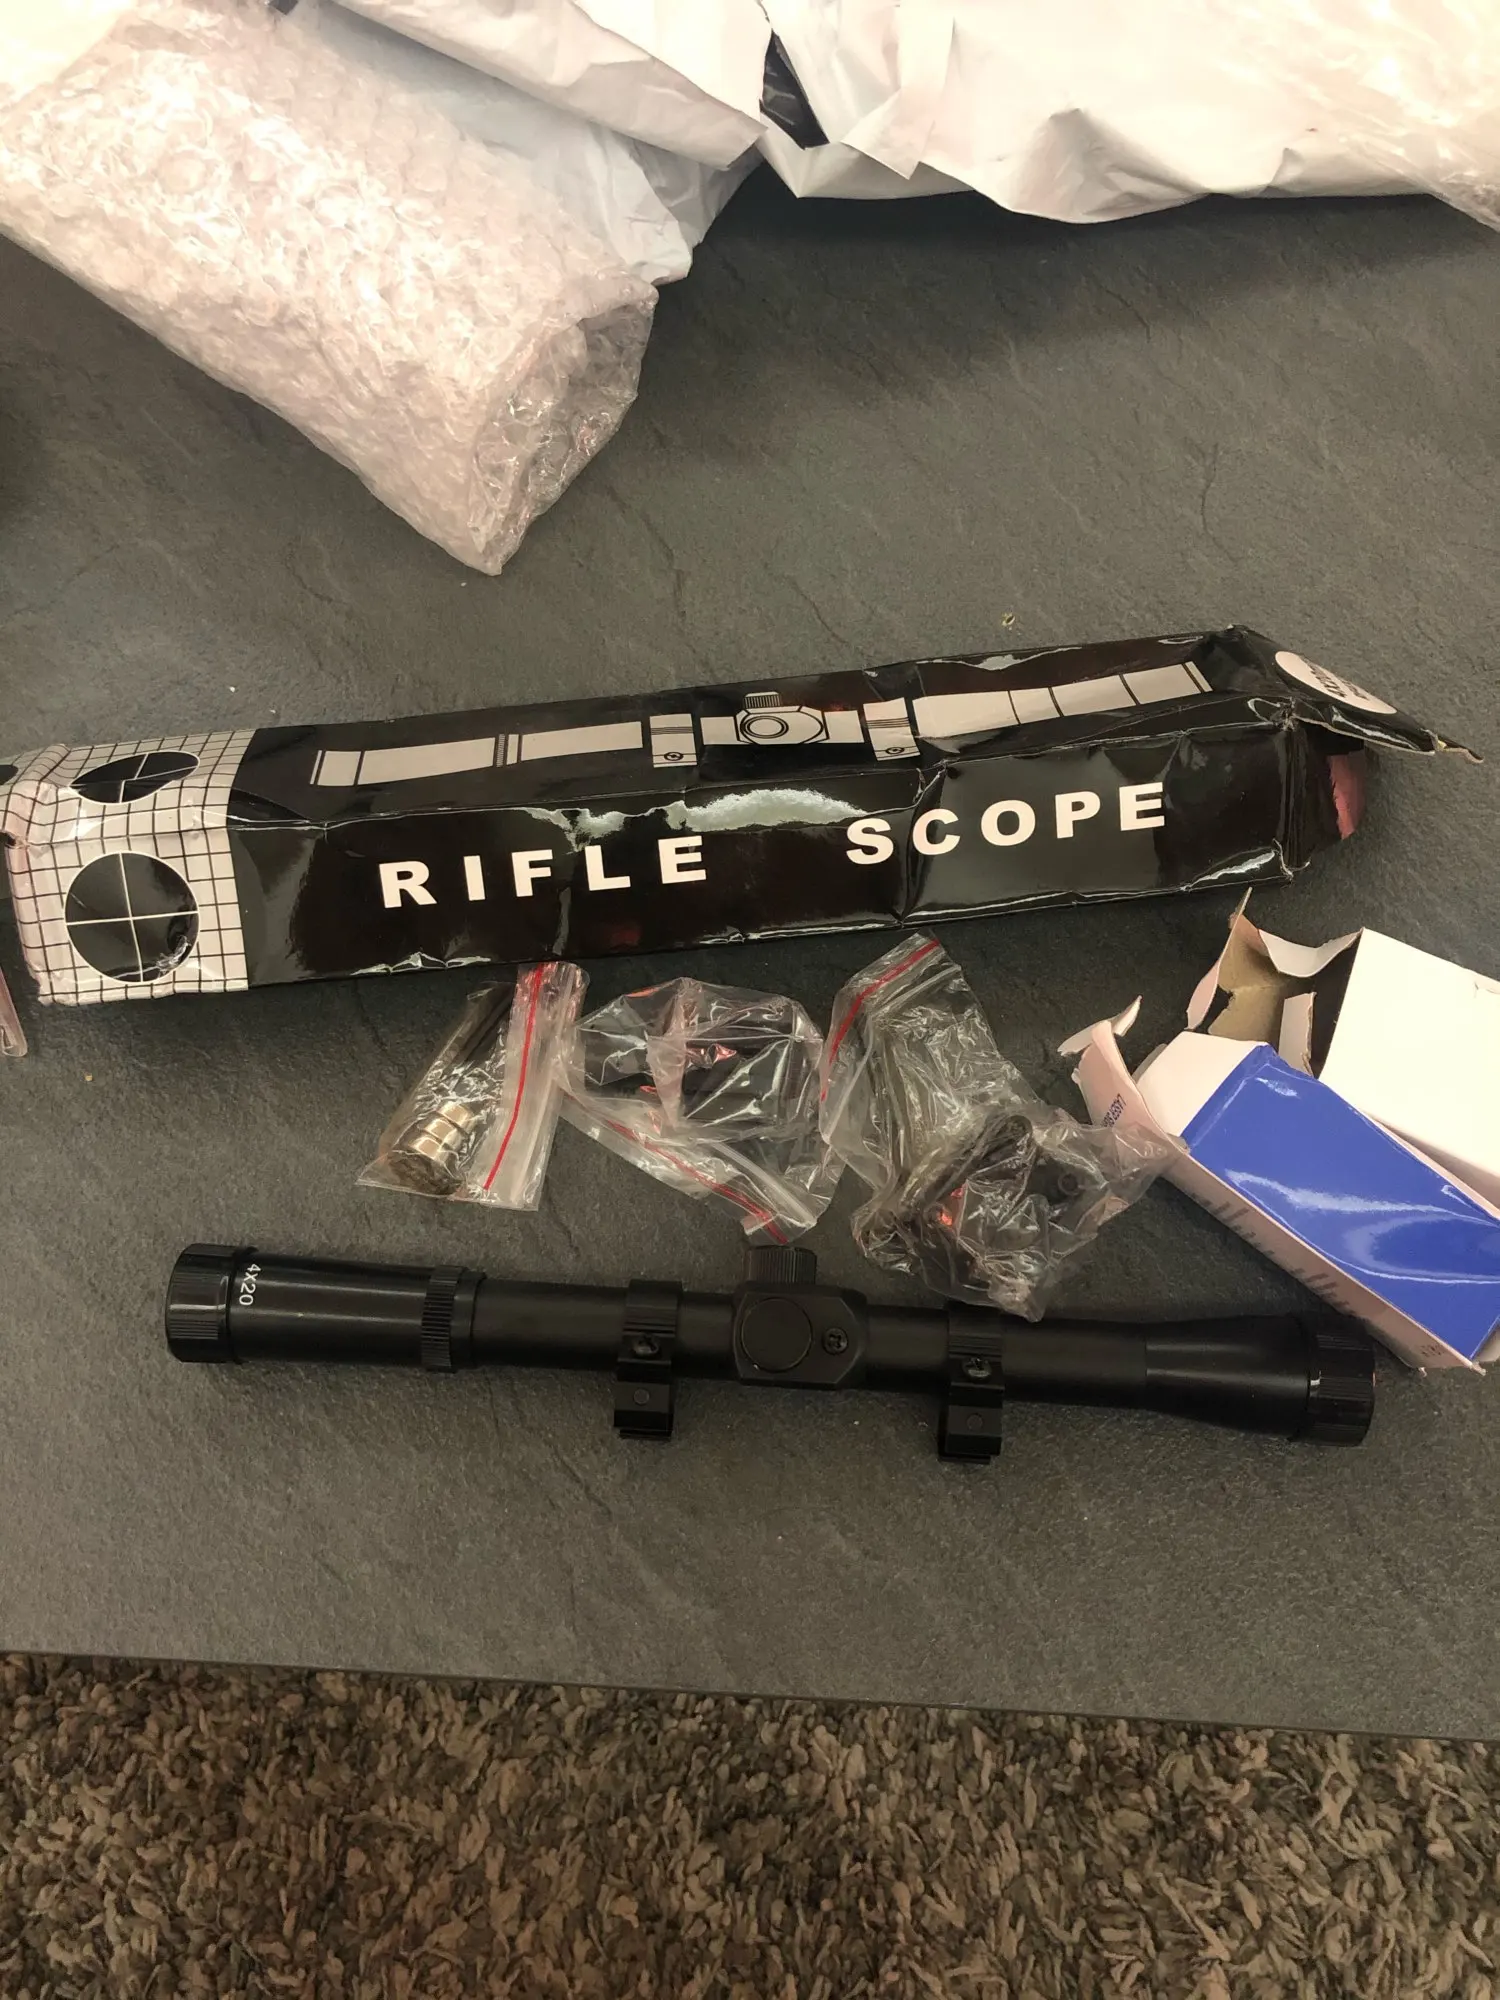 HOT 4x20 Gun Rifle Optics Scope Tactical Riflescope With Red Dot Laser Sights 